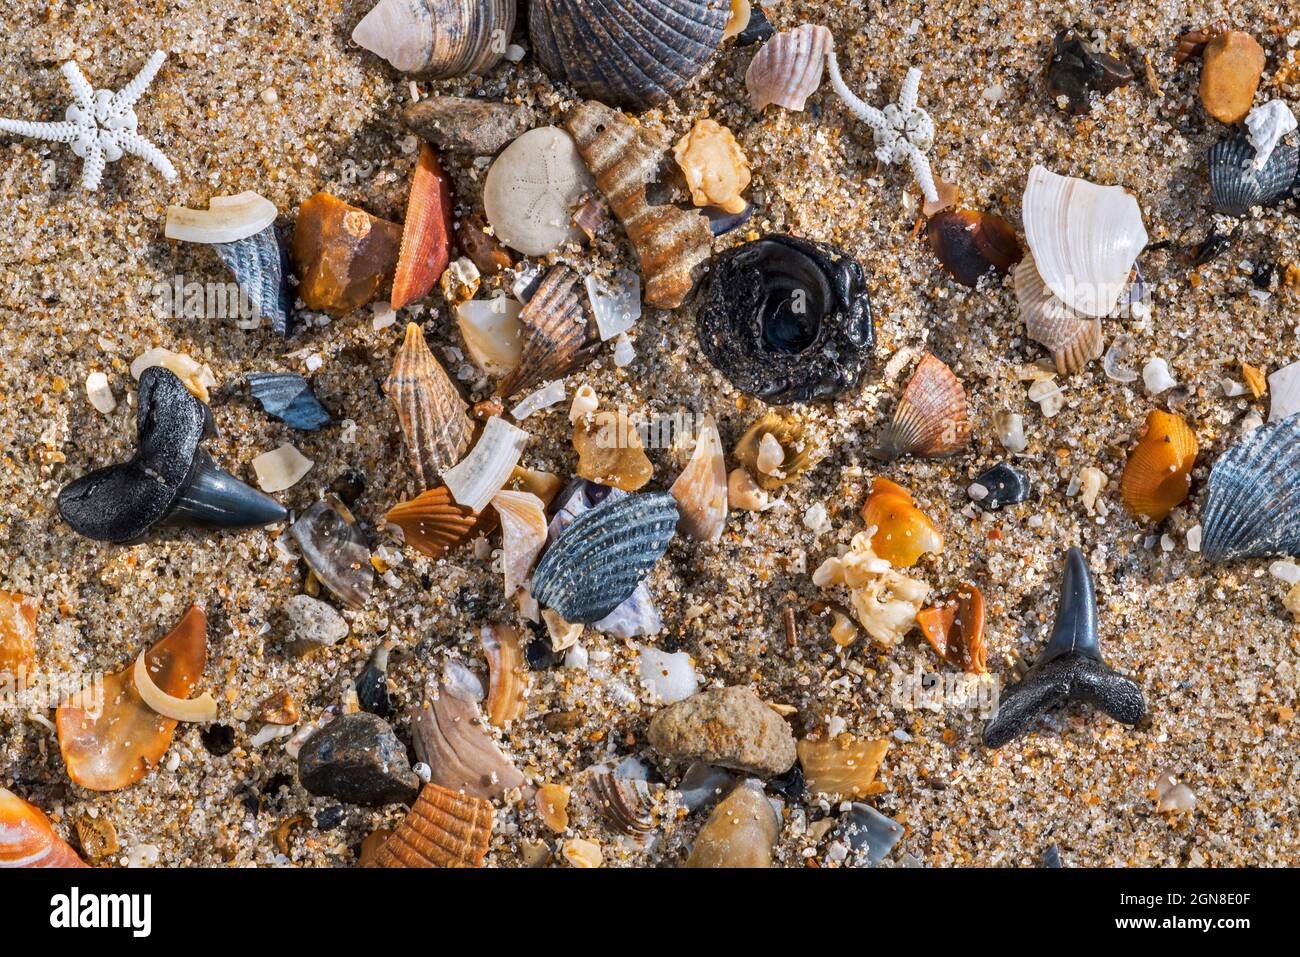 Eocene shark teeth fossils and fossilized fish vertebra on tideline / strandline of beach at ebb along North Sea coast, Zwin, Knokke-Heist, Belgium Stock Photo